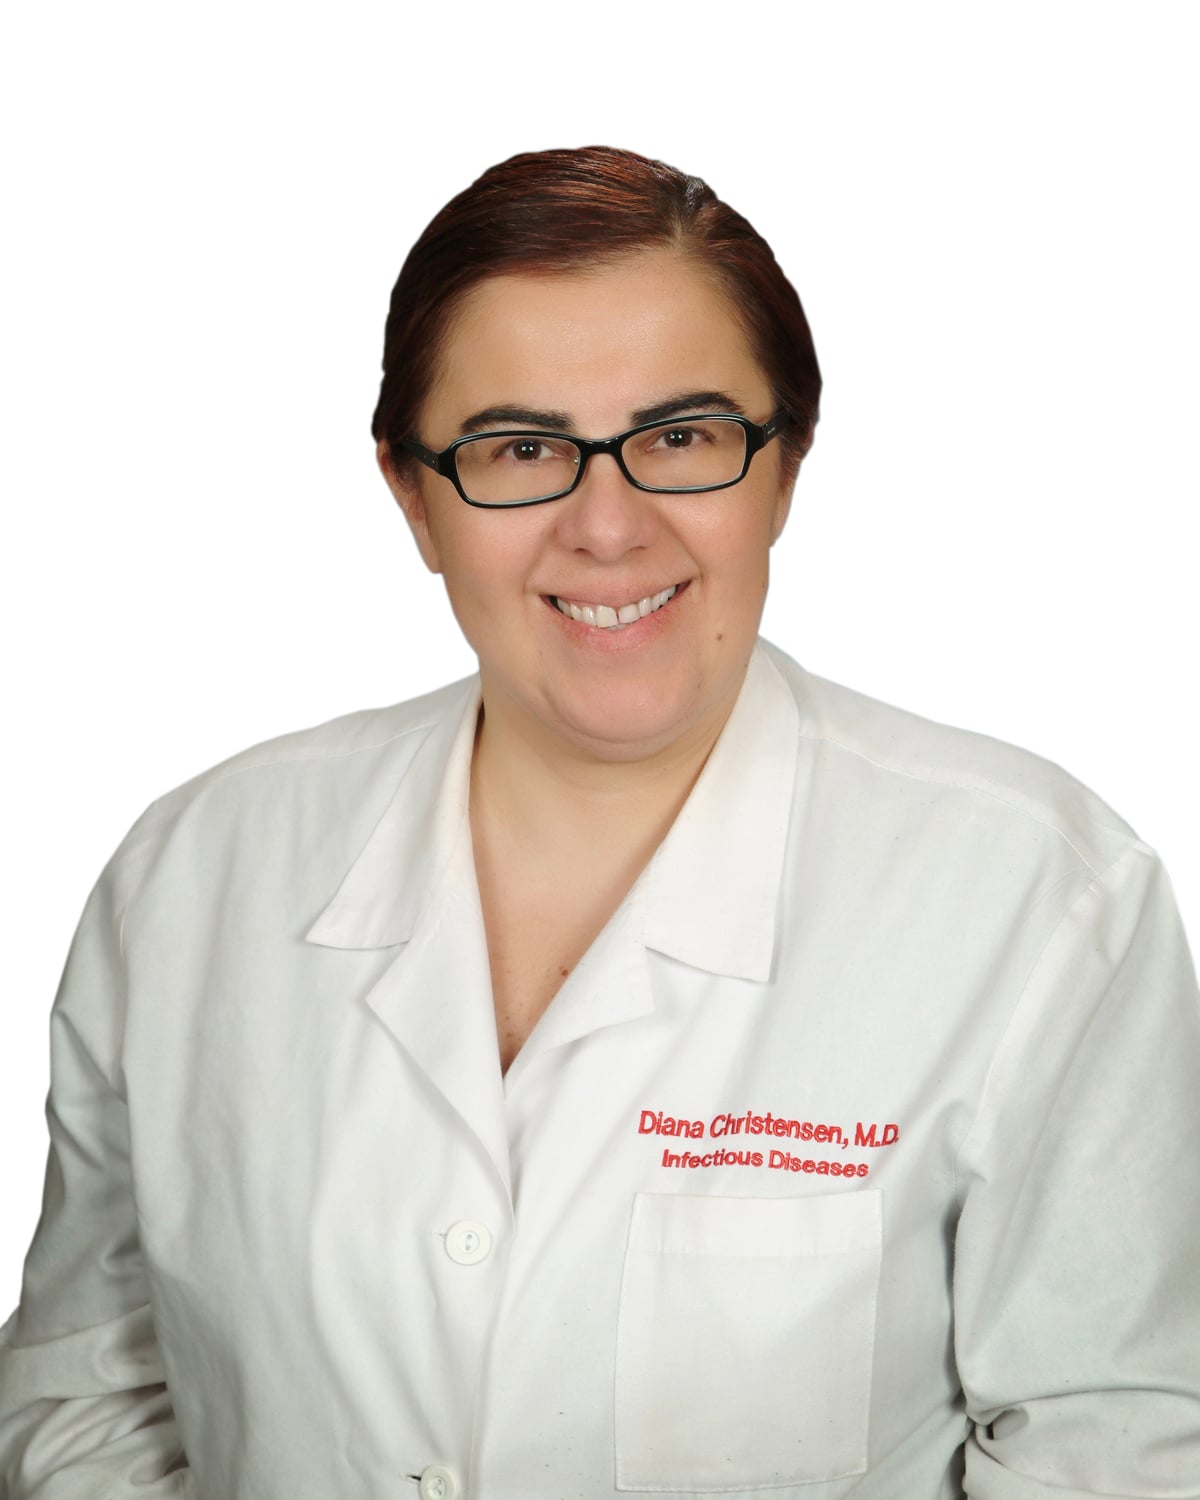 Dr. Diana Christensen